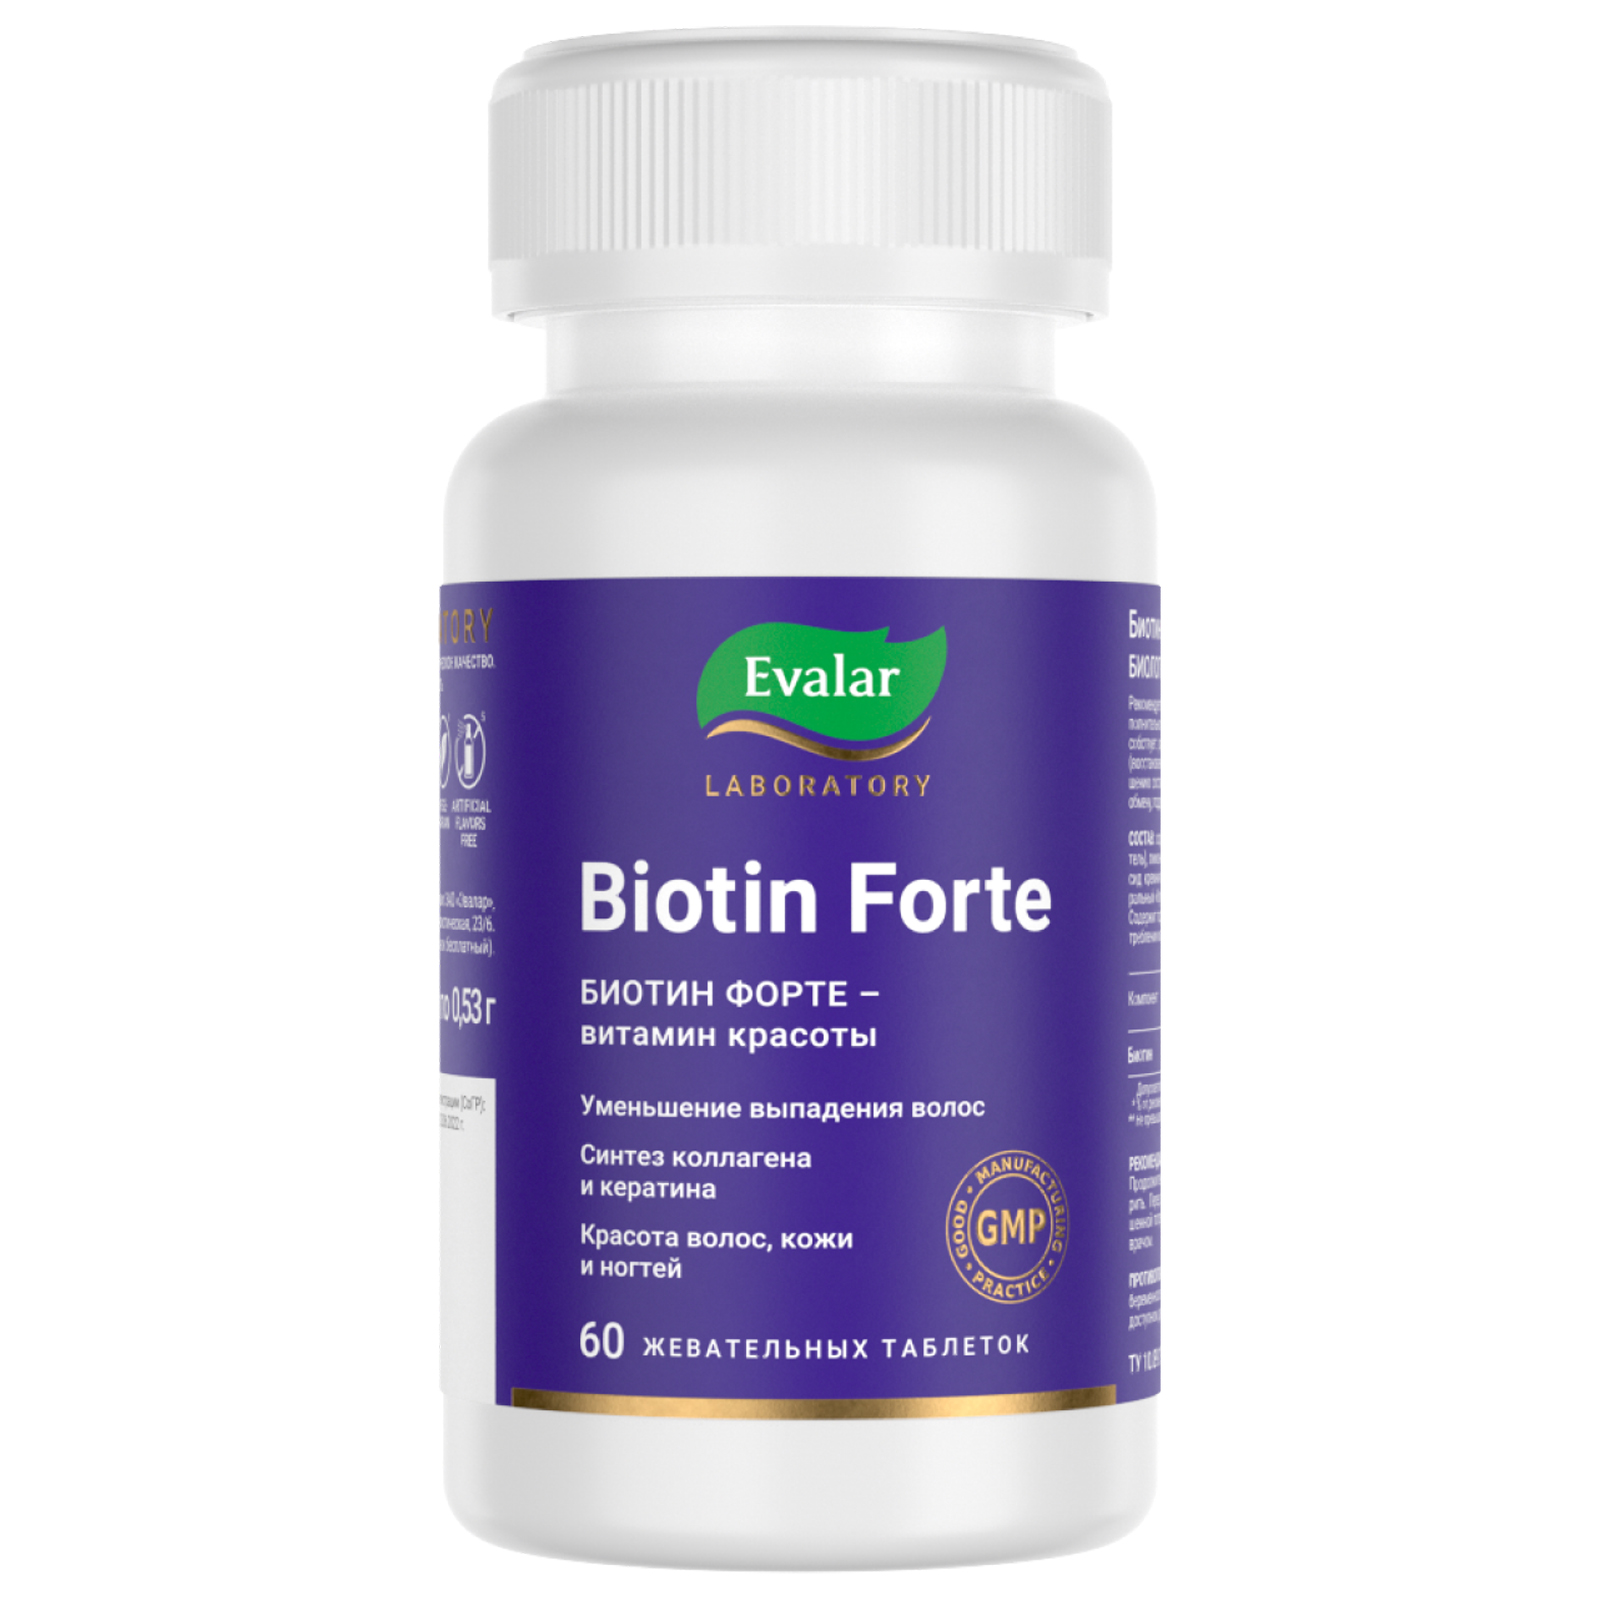 Купить Биотин Форте, 60 таблеток с рисками, Evalar Laboratory, Биотин Форте Evalar Laboratory таблетотки 60 шт.